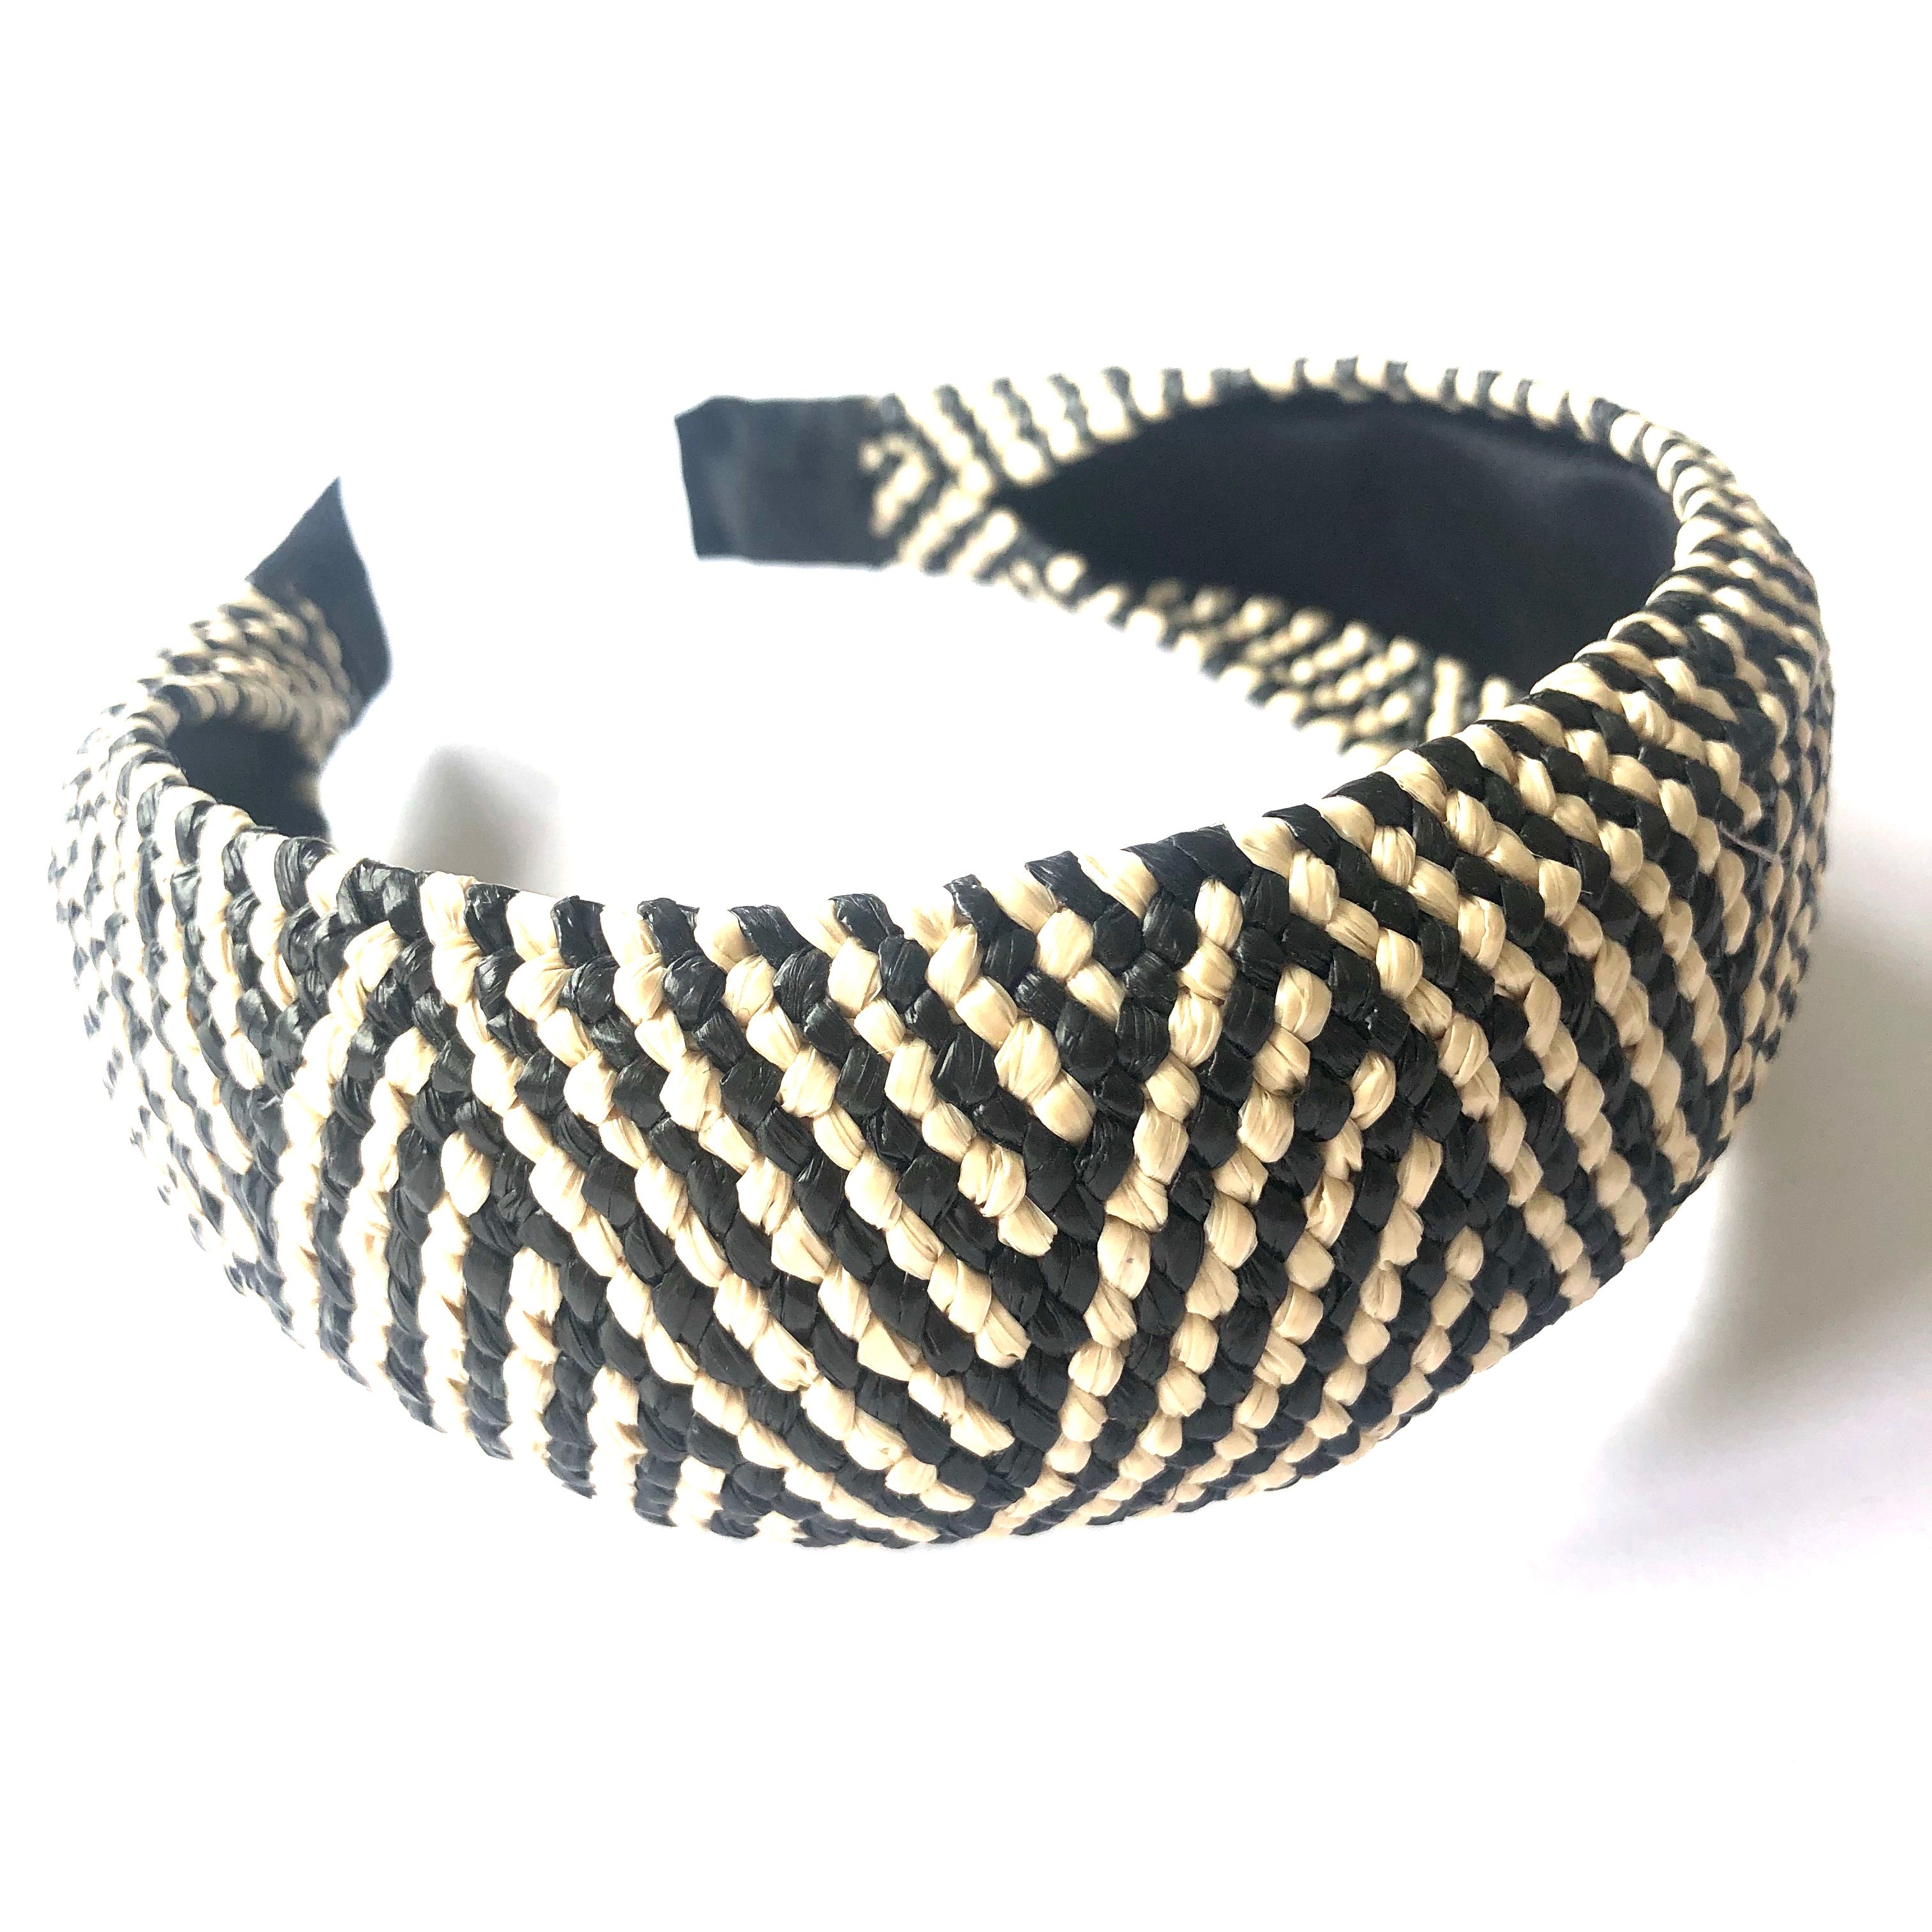 Woven Rattan Headband Style 3 - Black & White